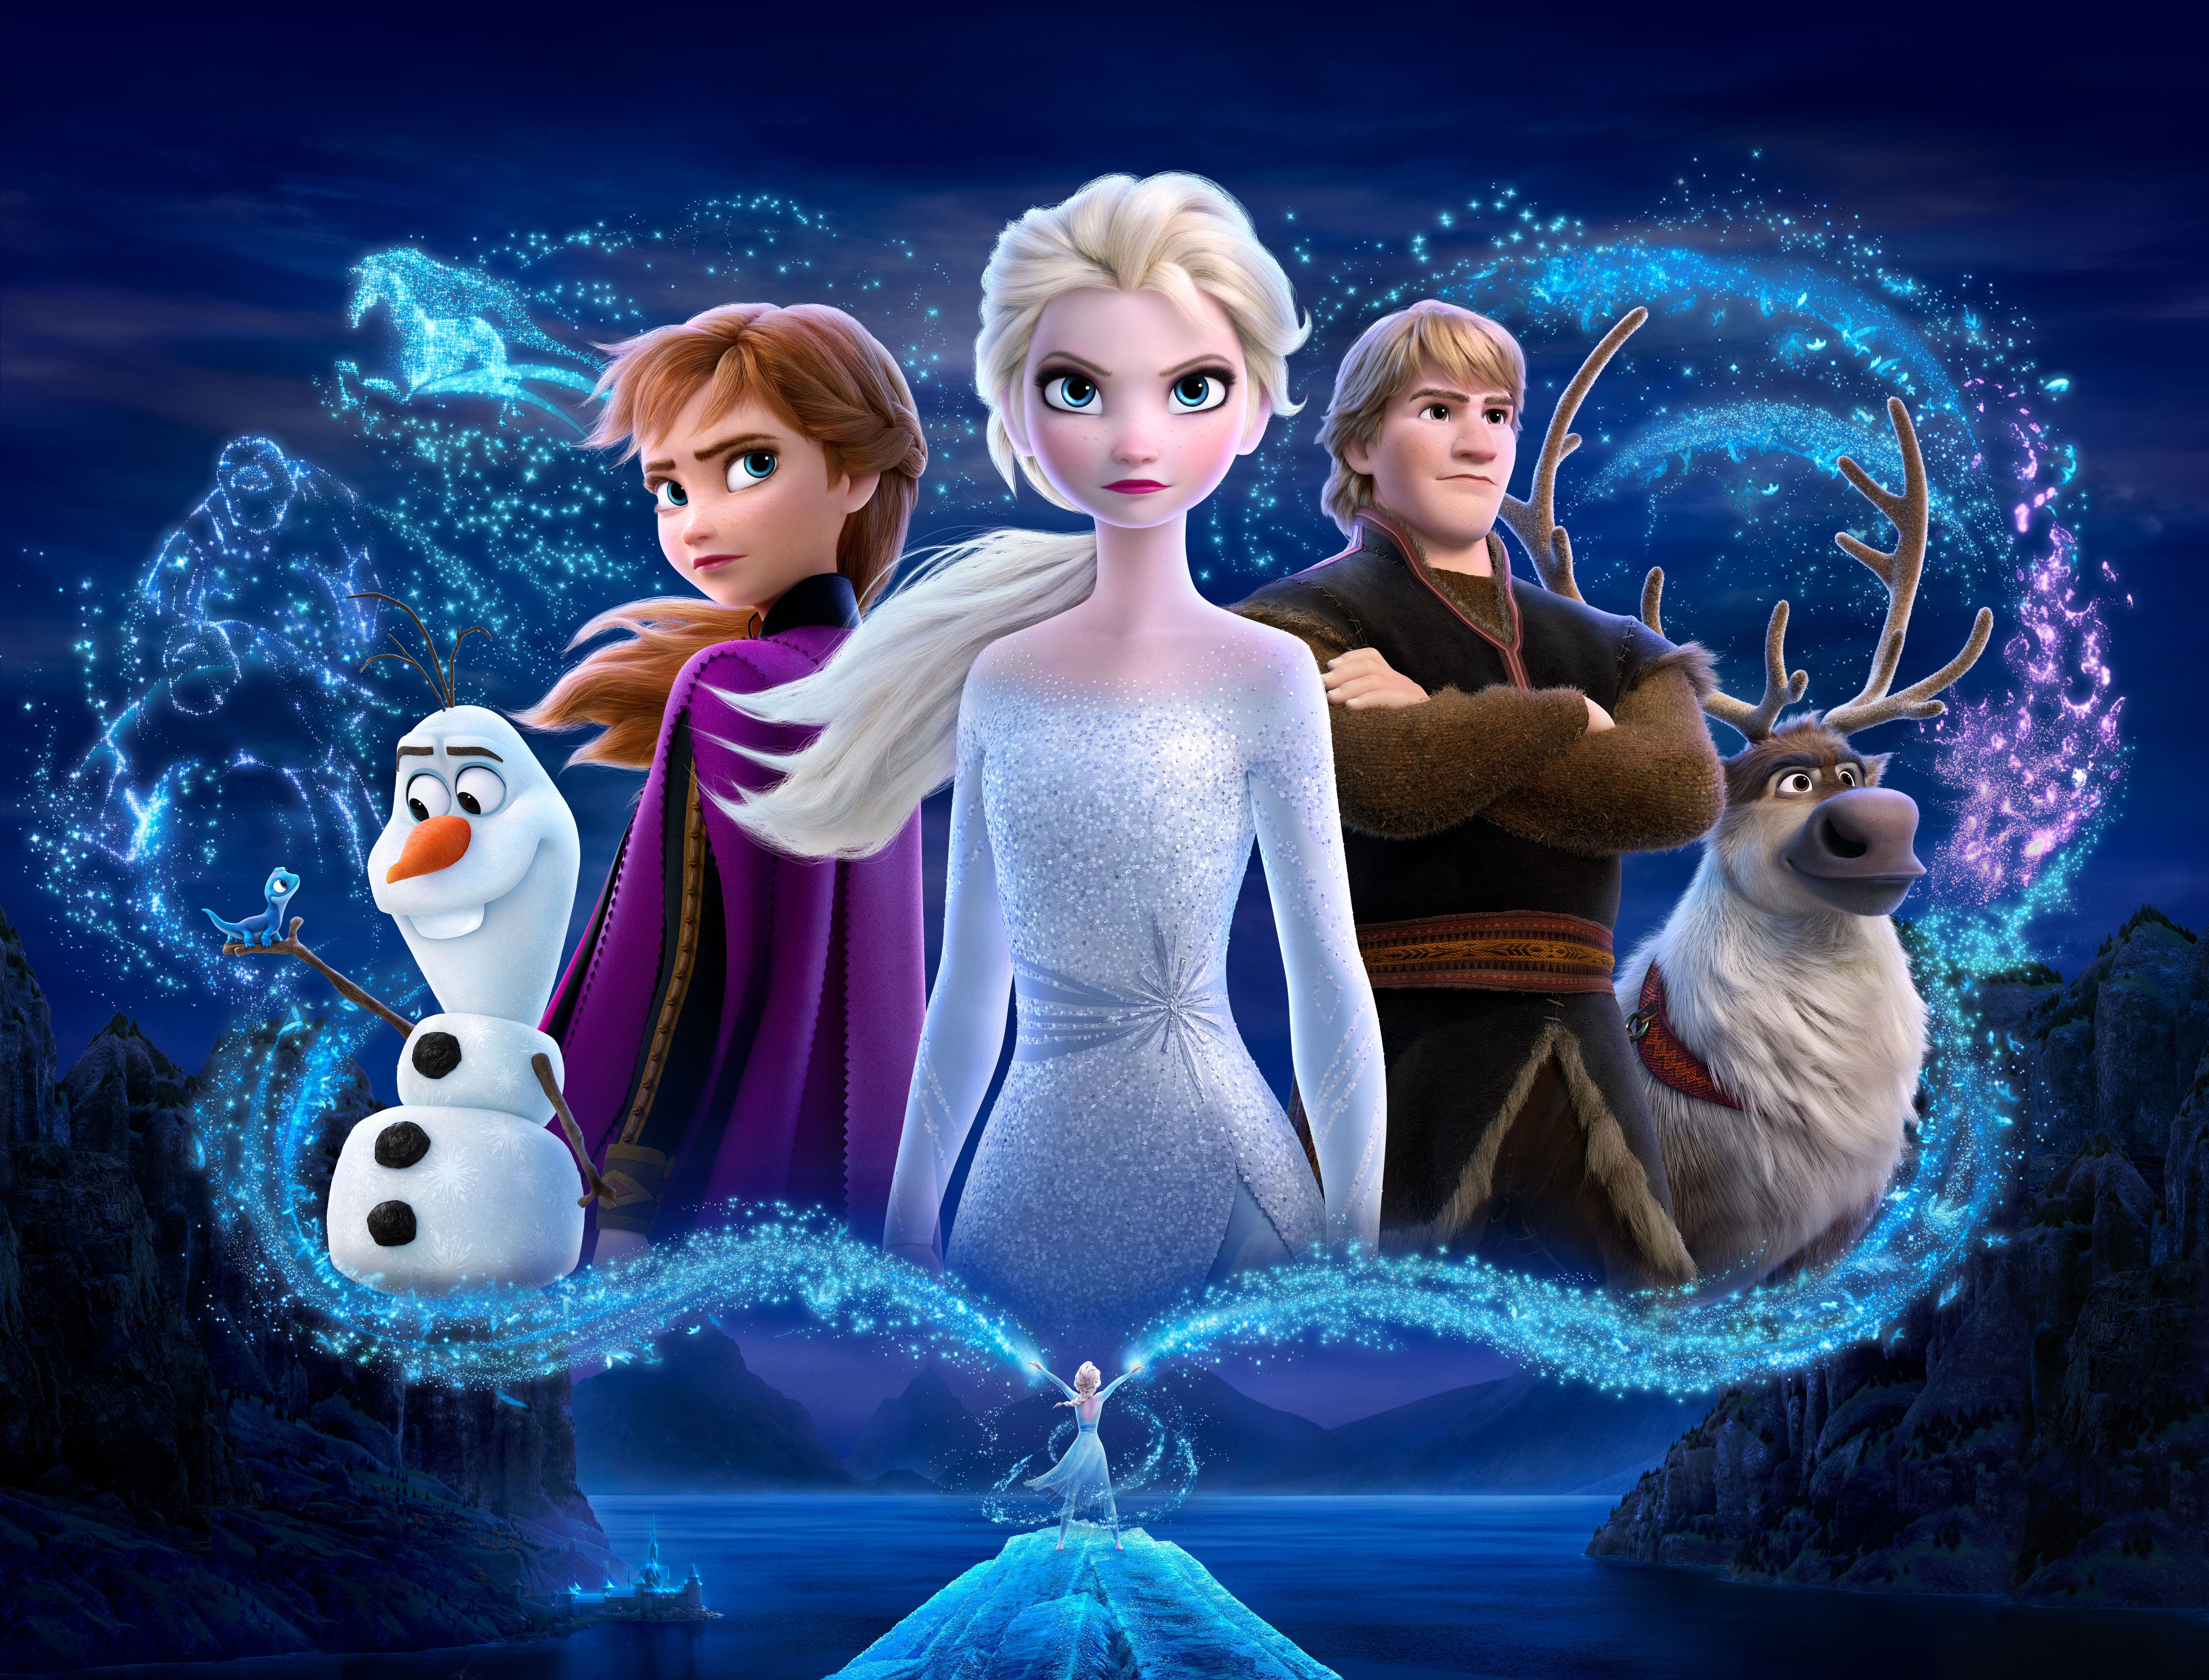 frozen 2, elsa (frozen), movie, anna (frozen), kristoff (frozen), olaf (frozen)